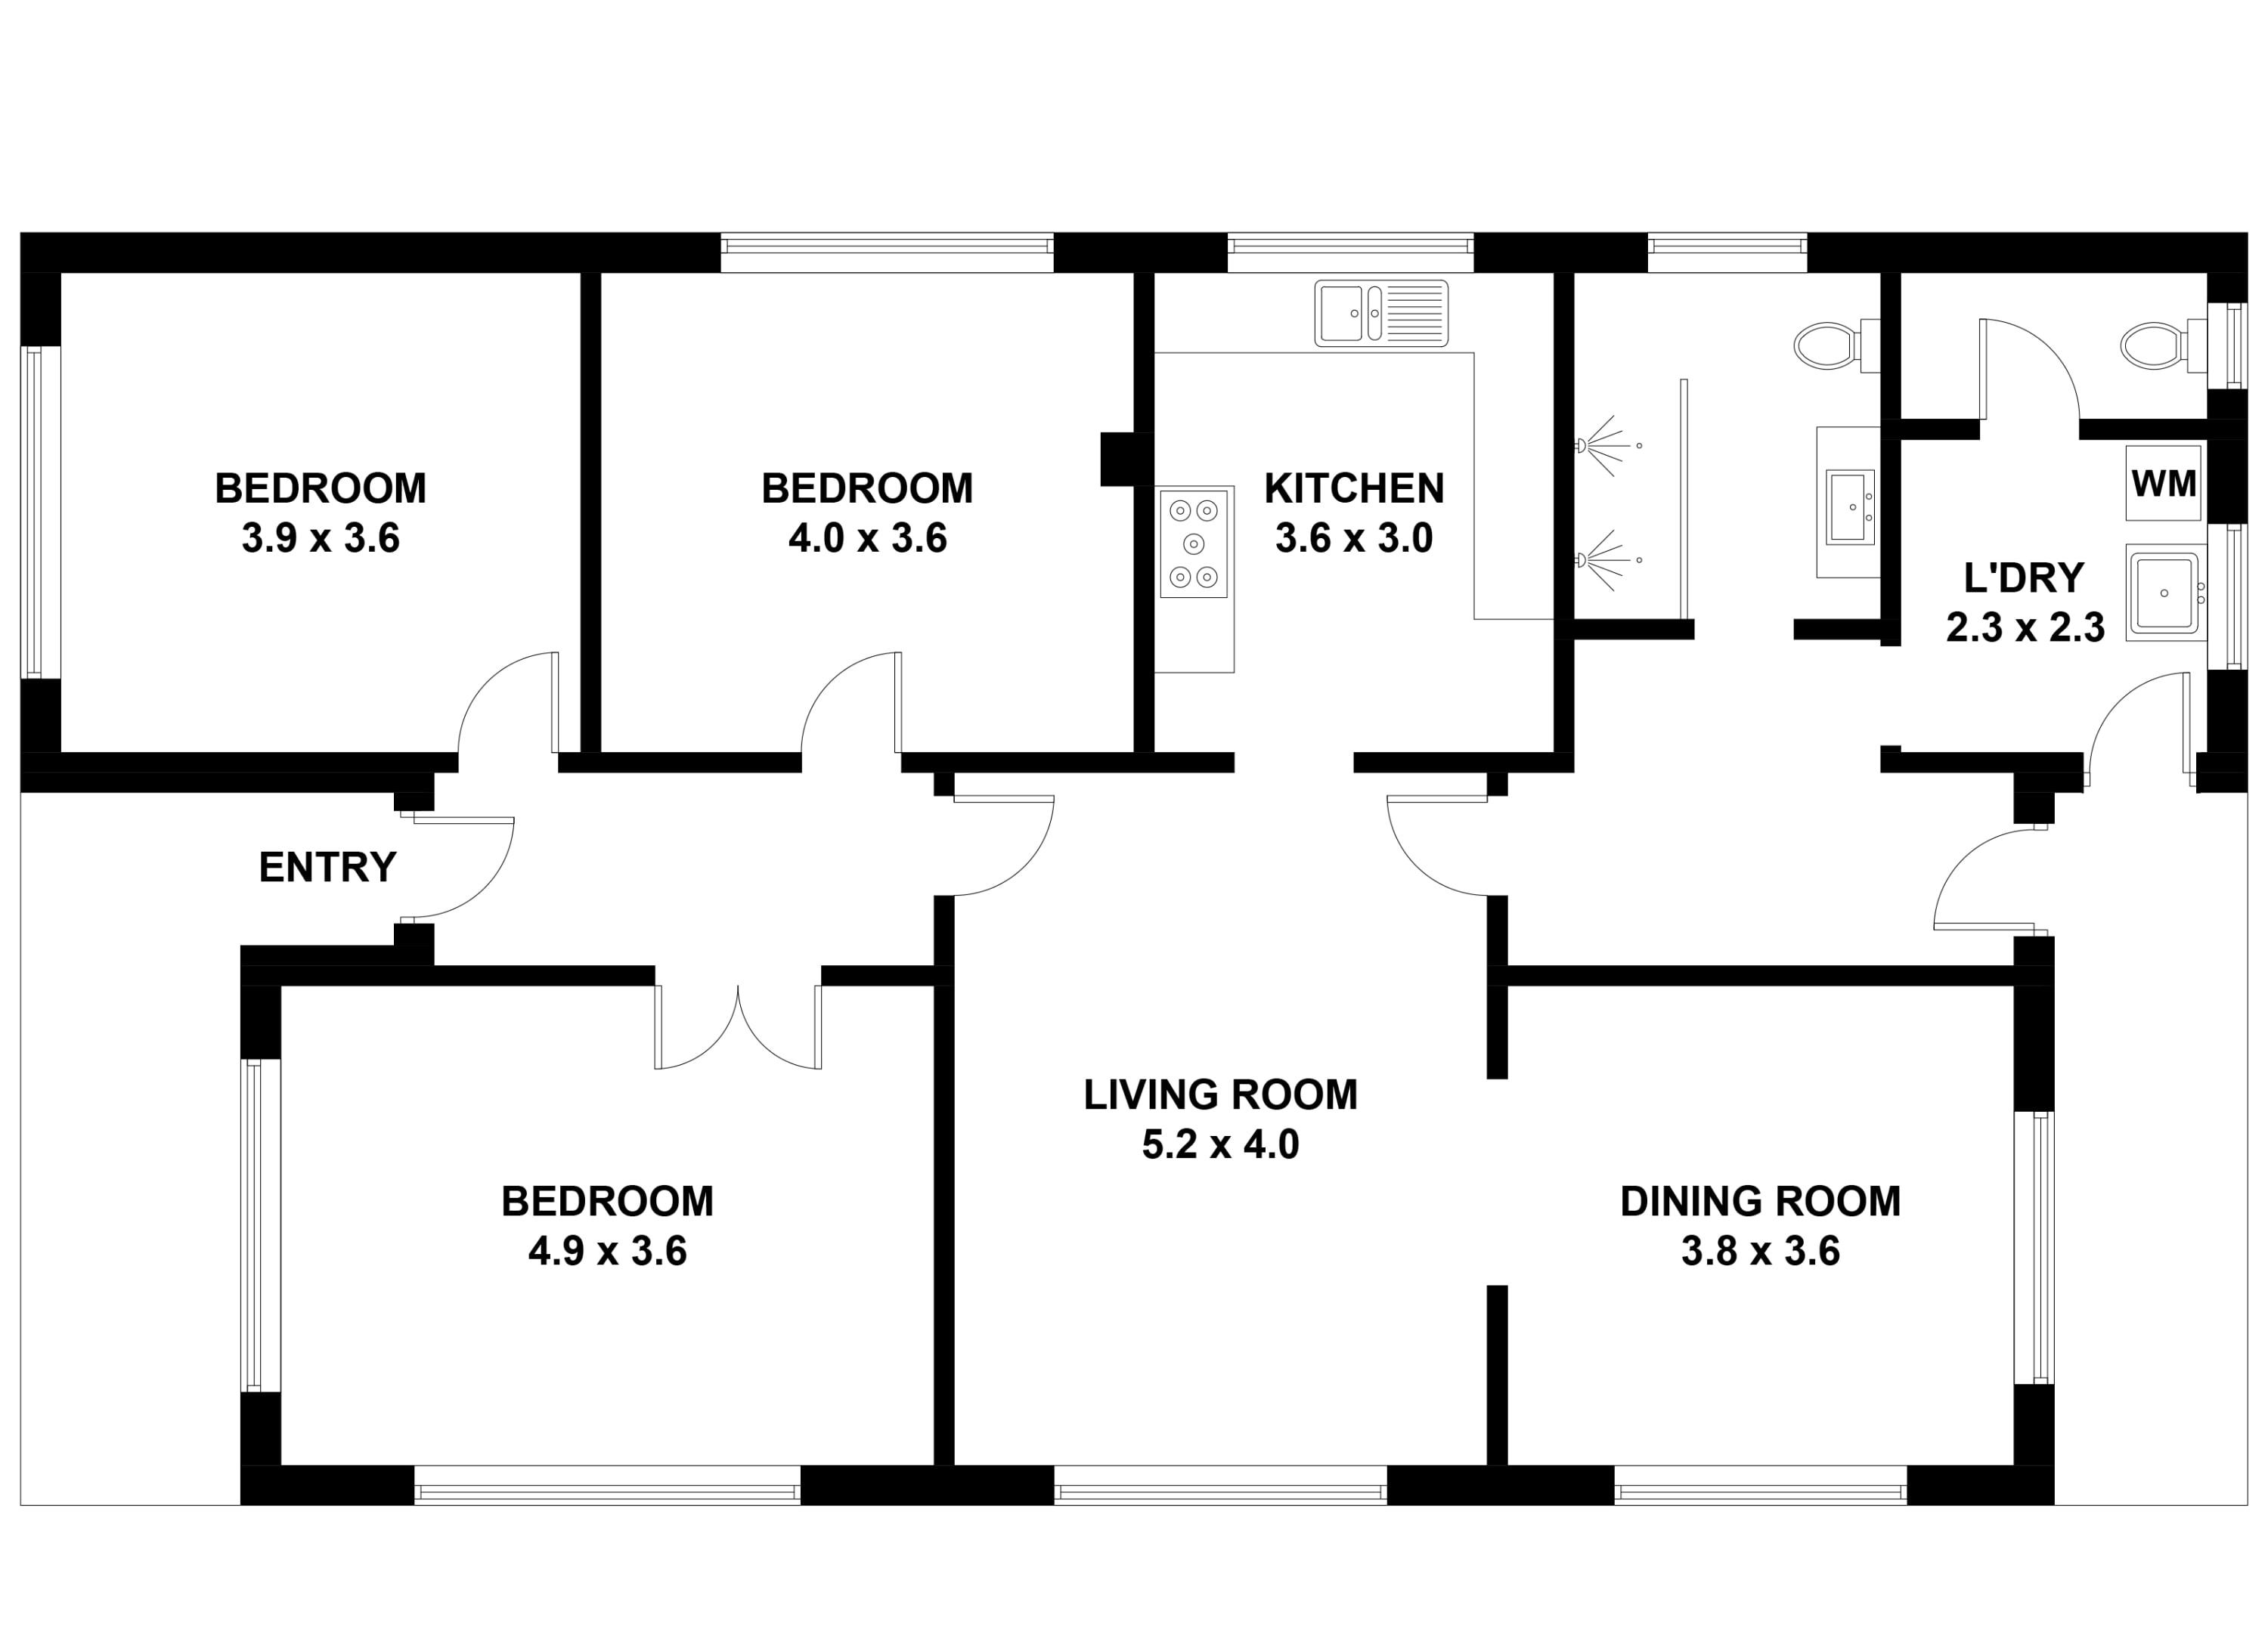 Floorplan of the home